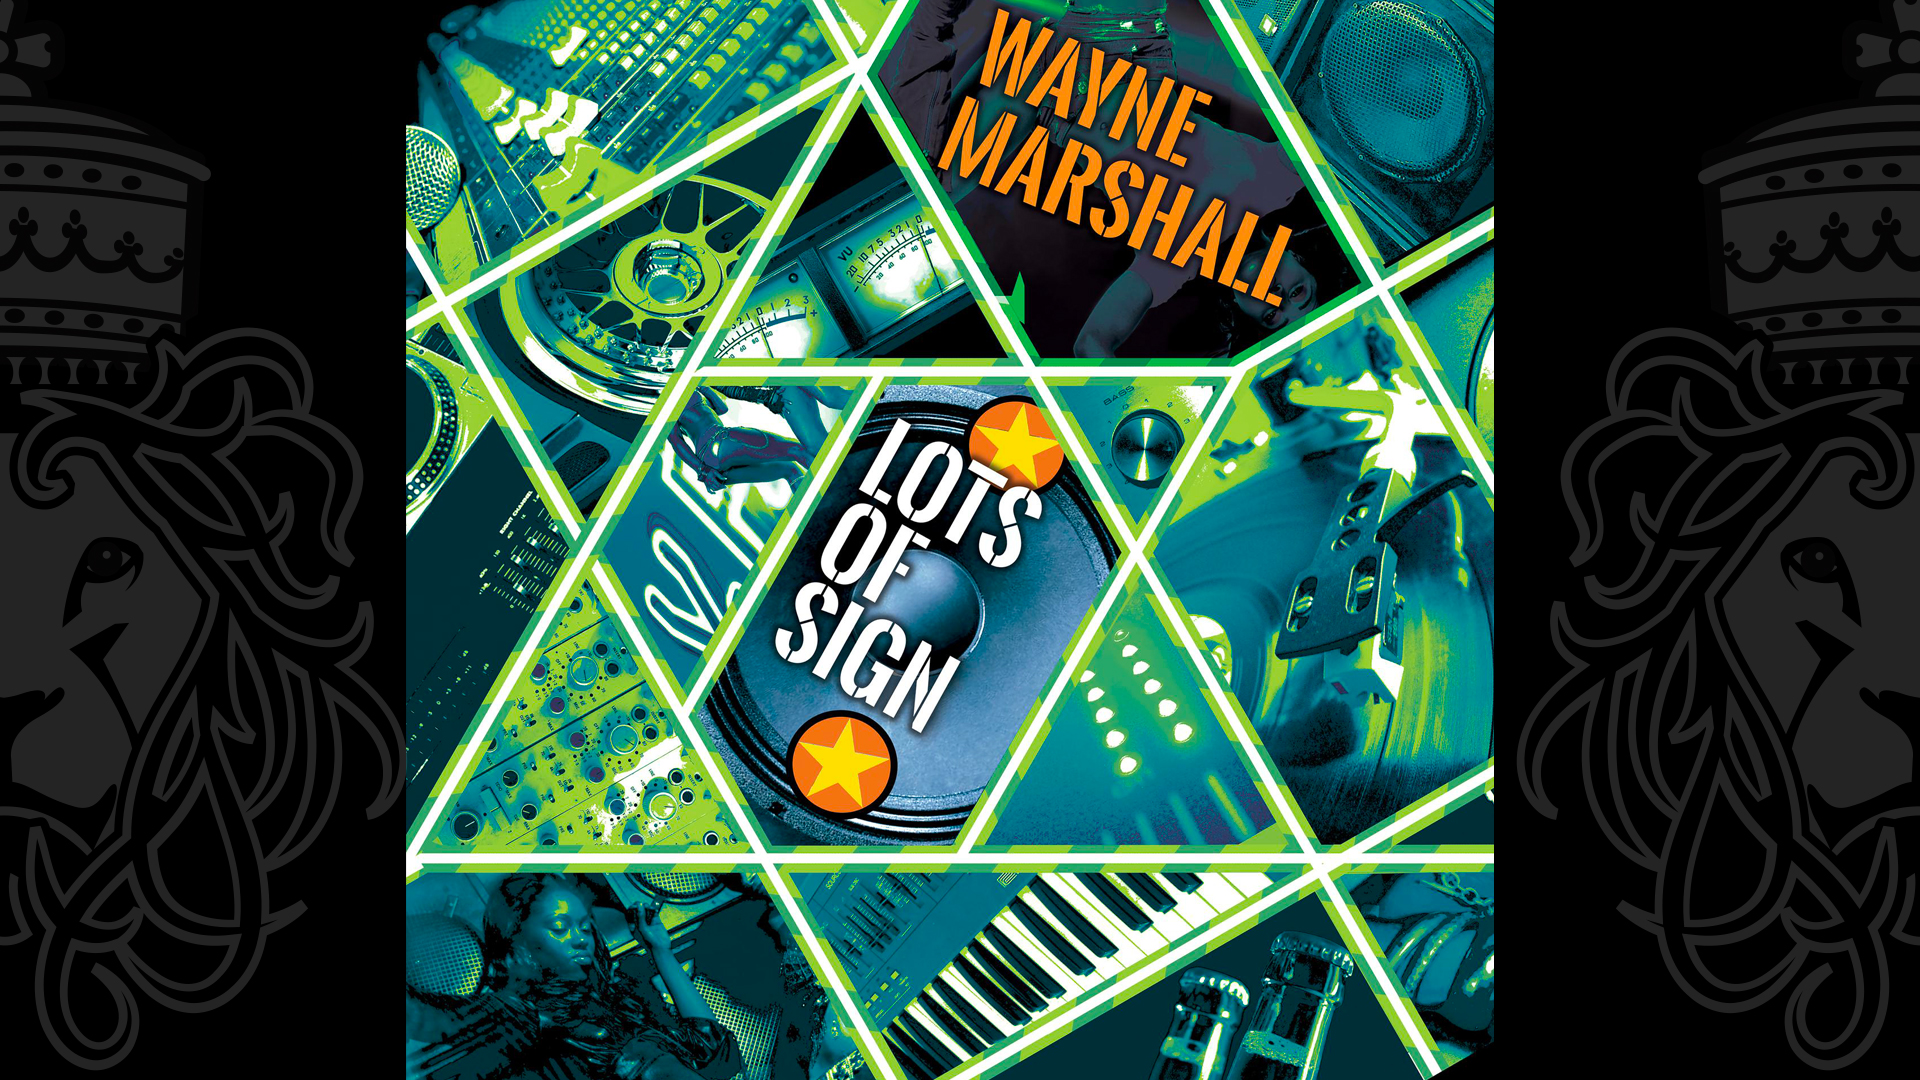 Wayne Marshall - Lots of Sign